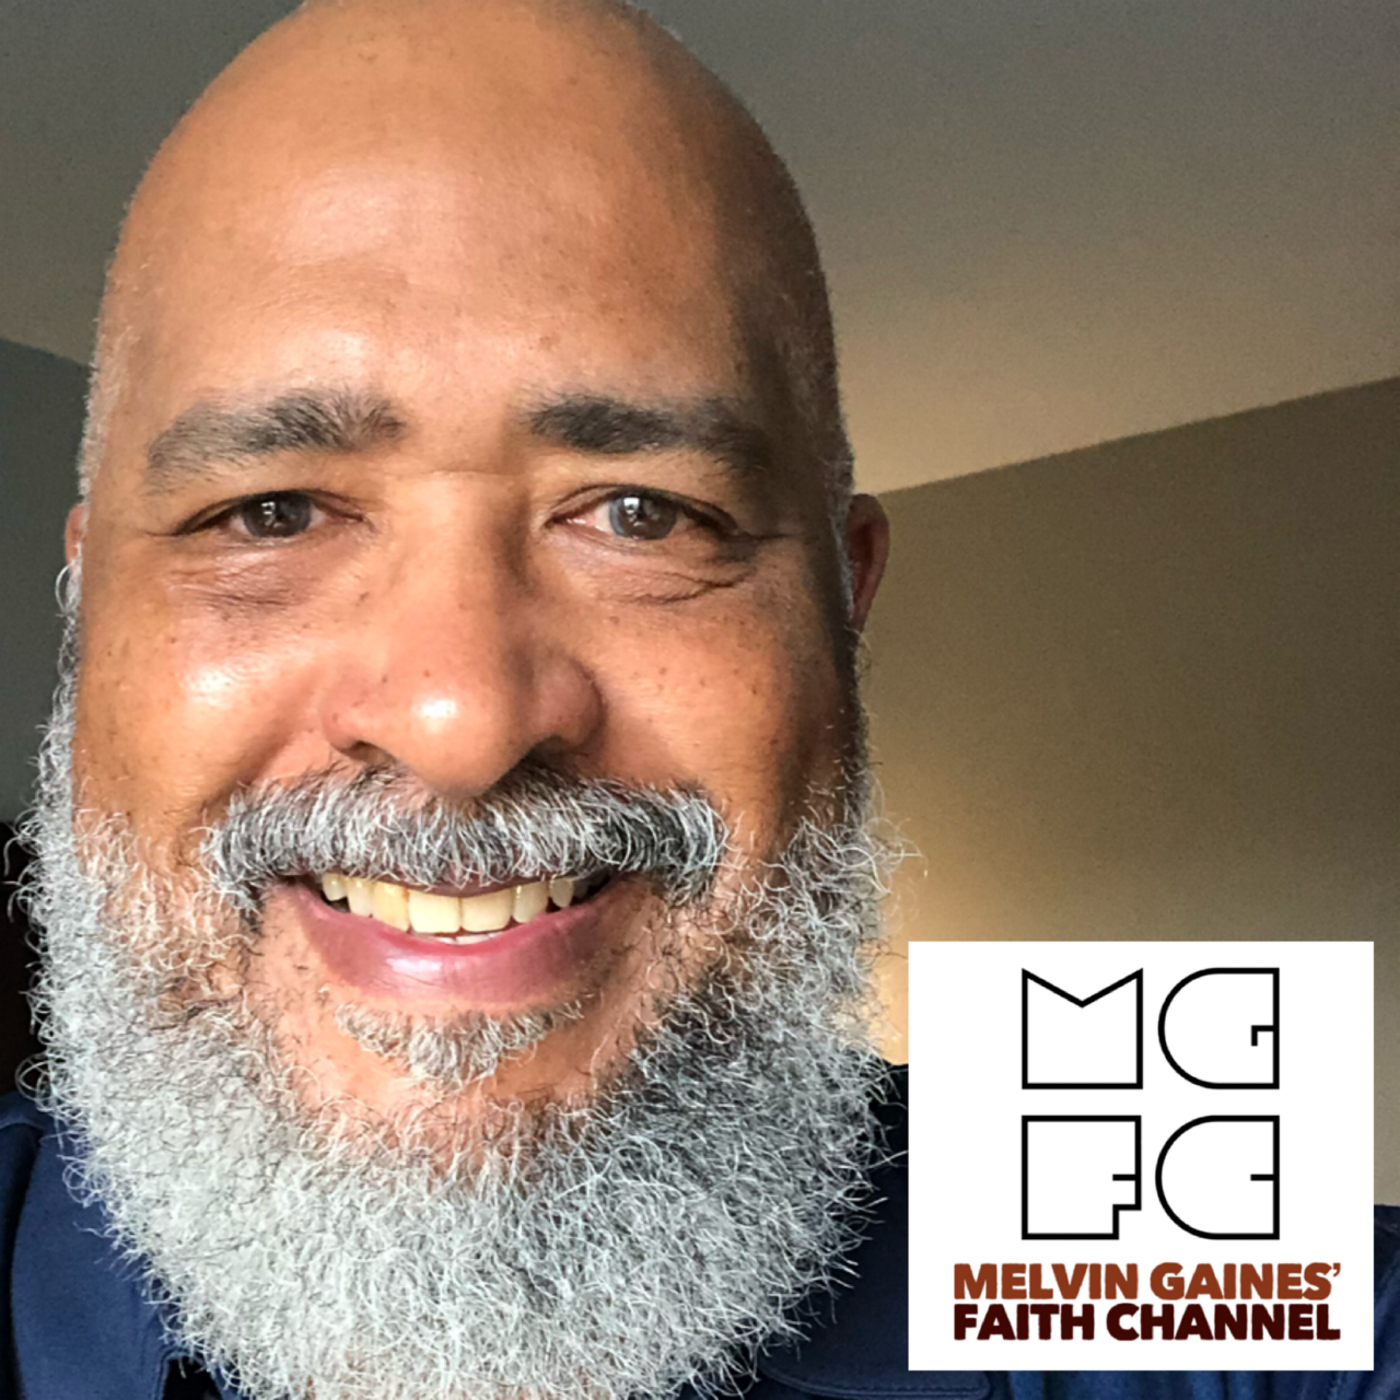 Melvin Gaines' Faith Channel